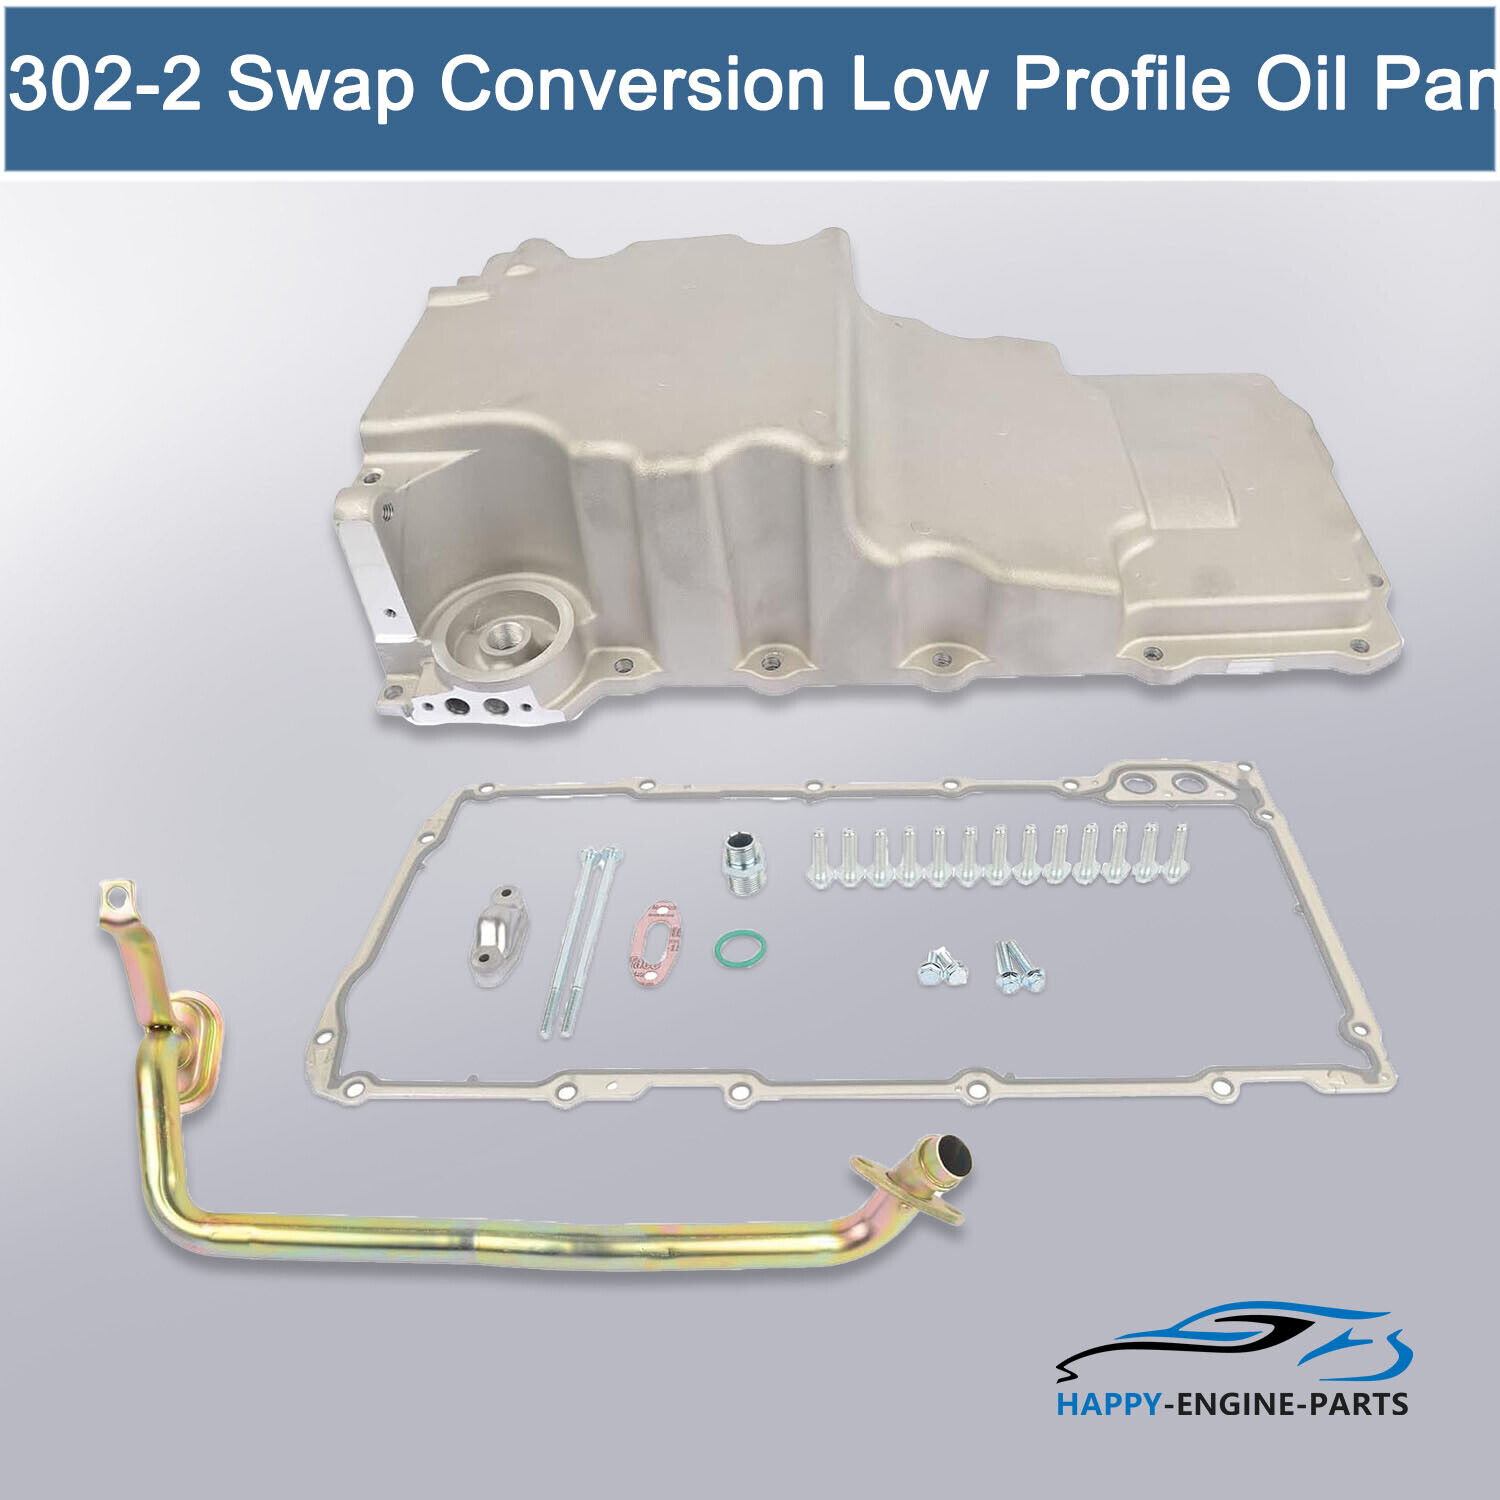 302-2 LS Swap Engine Oil Pan Kit Fits For Chevy LS1 LS2 LS3 4.8L 5.3L 5.7L 6.0L 